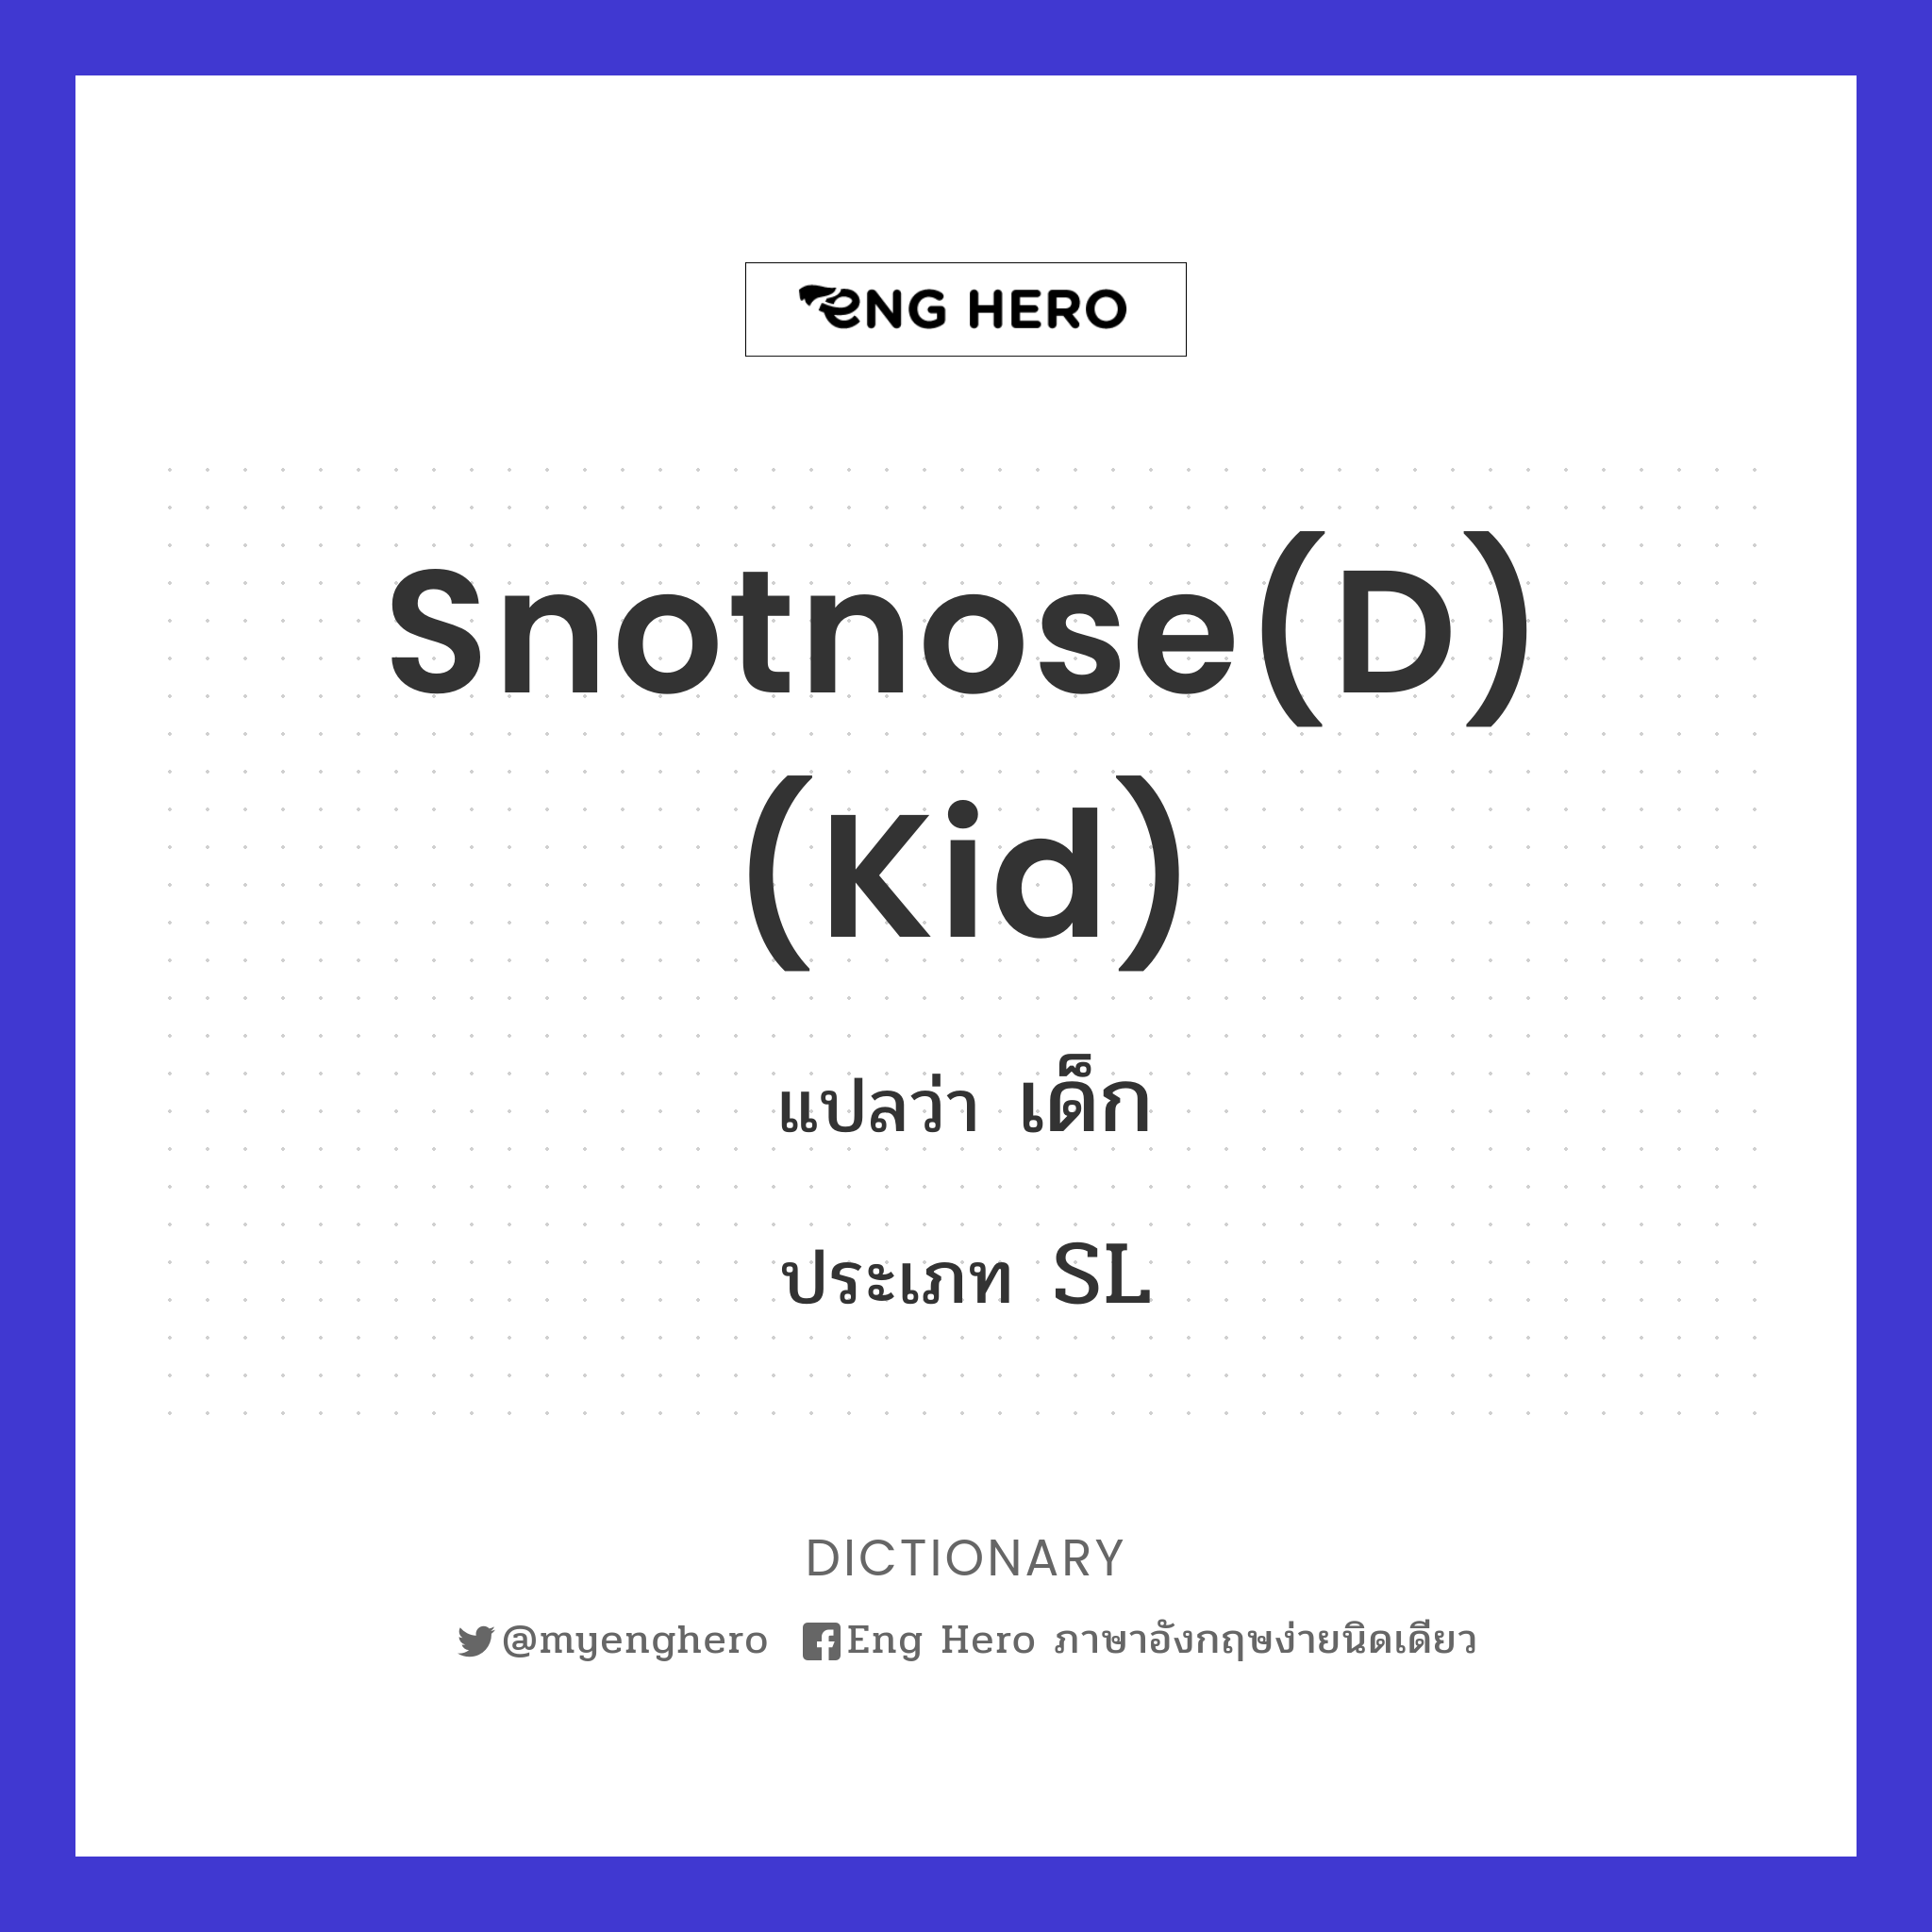 snotnose(d) (kid)